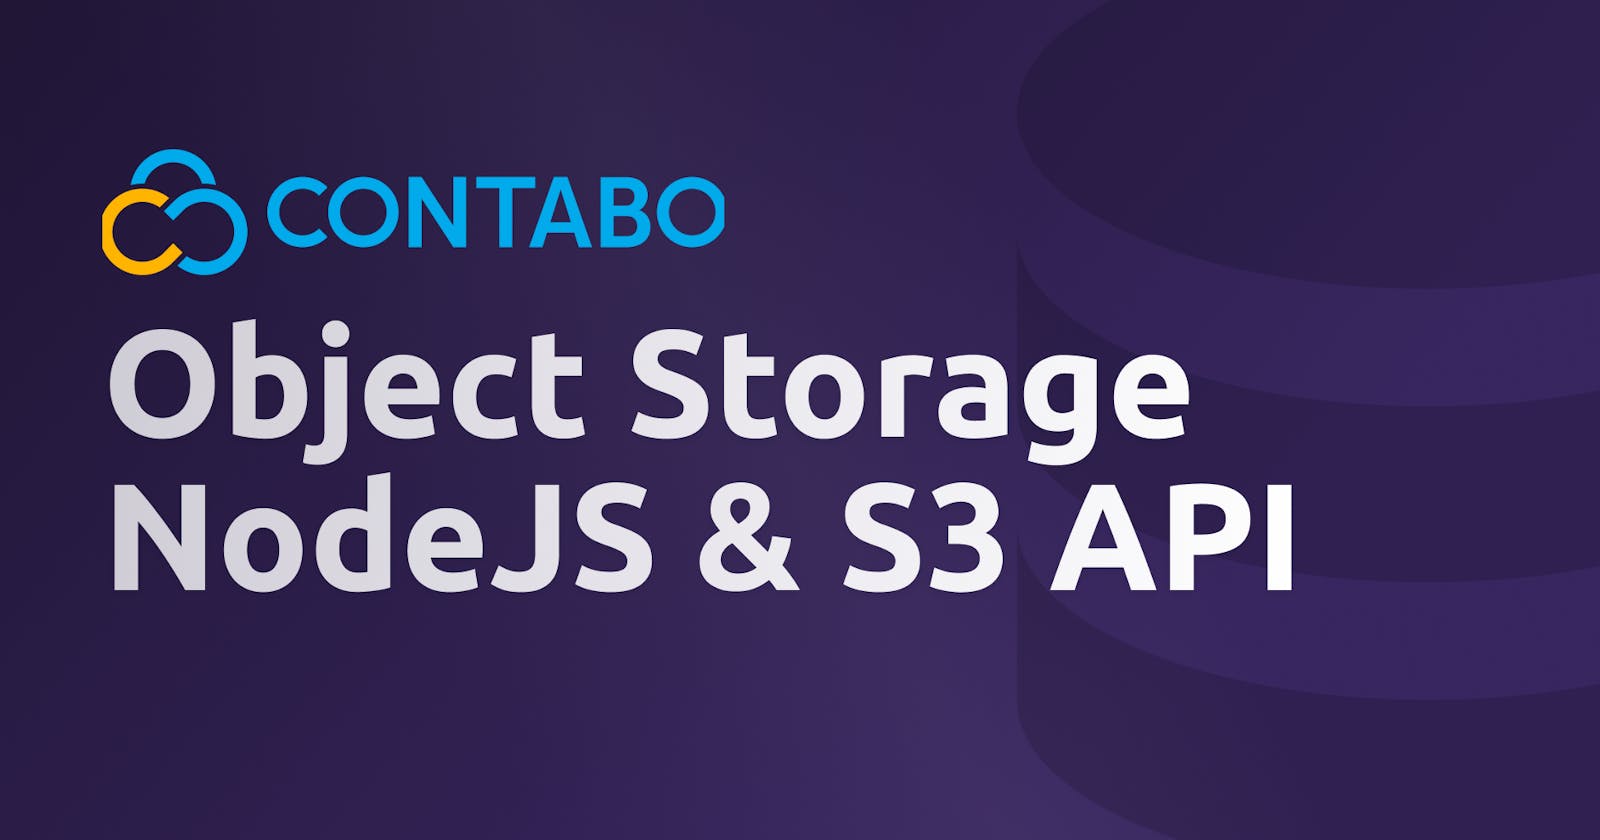 Use Contabo Object Storage with NodeJS